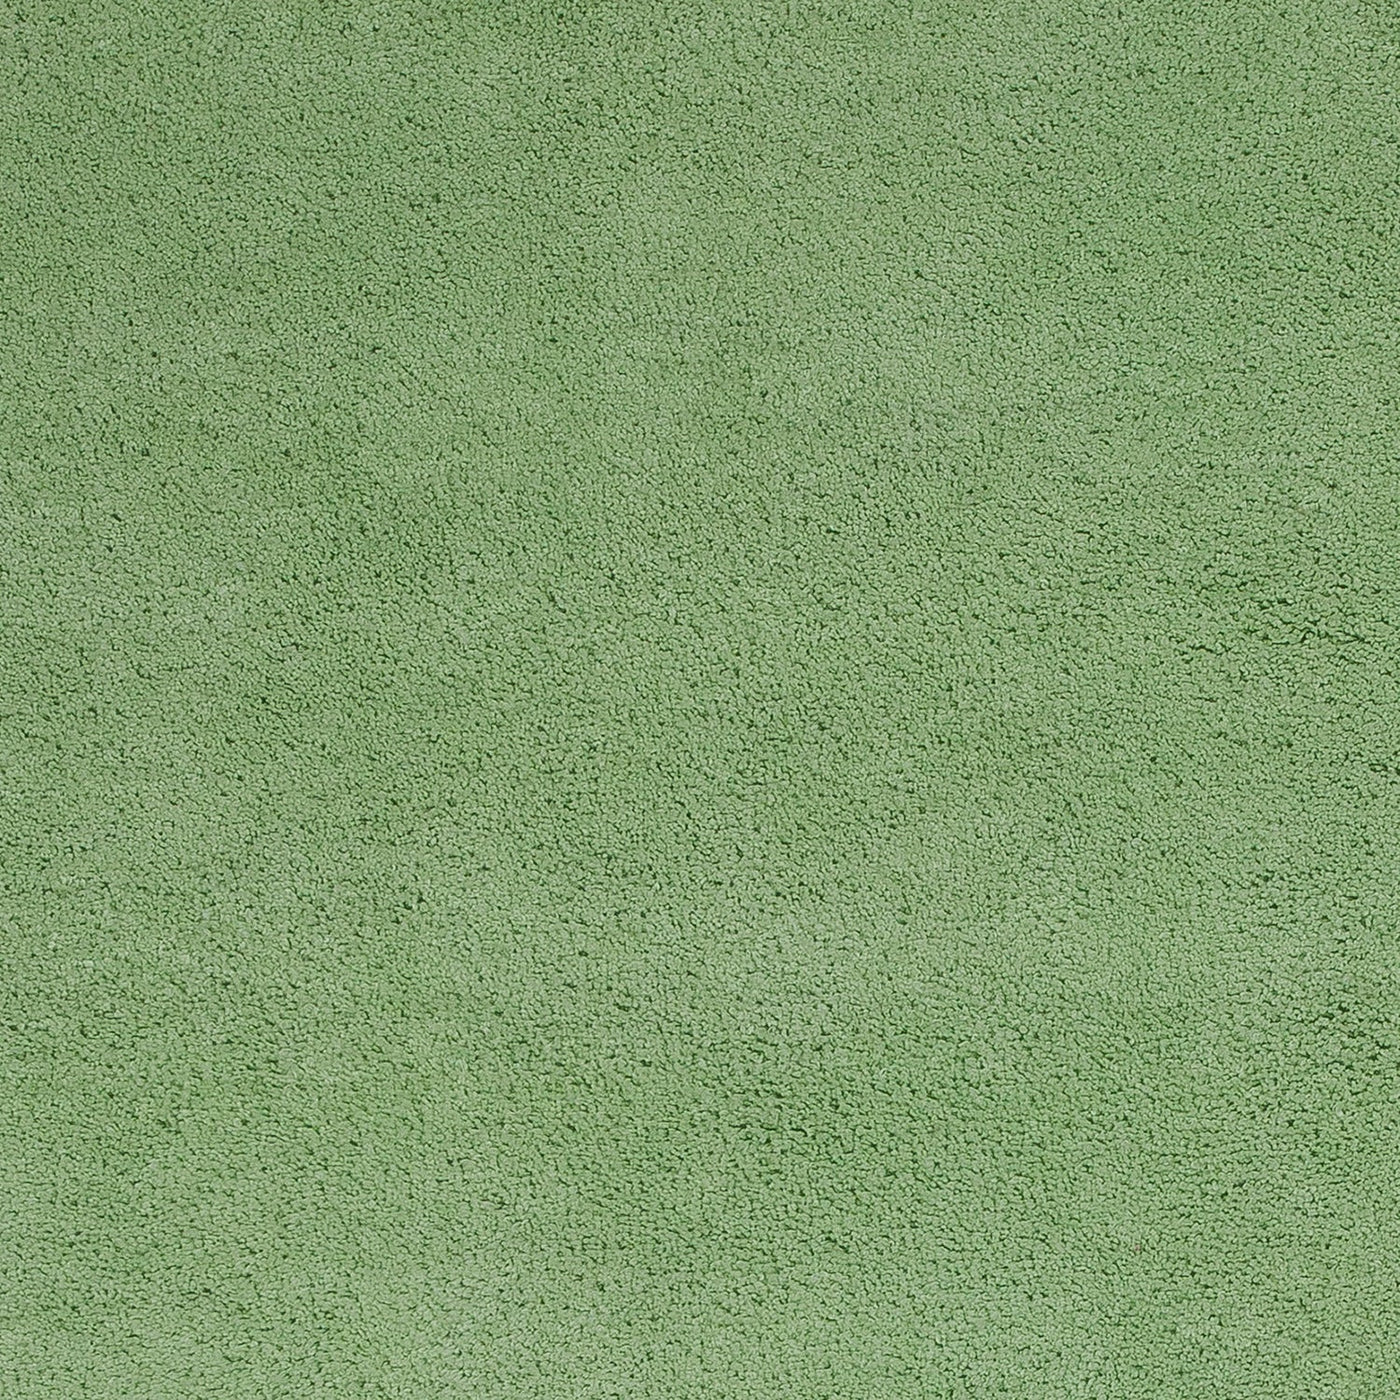 Bahia XV 5' x 7' - Spearmint Green Area Rug